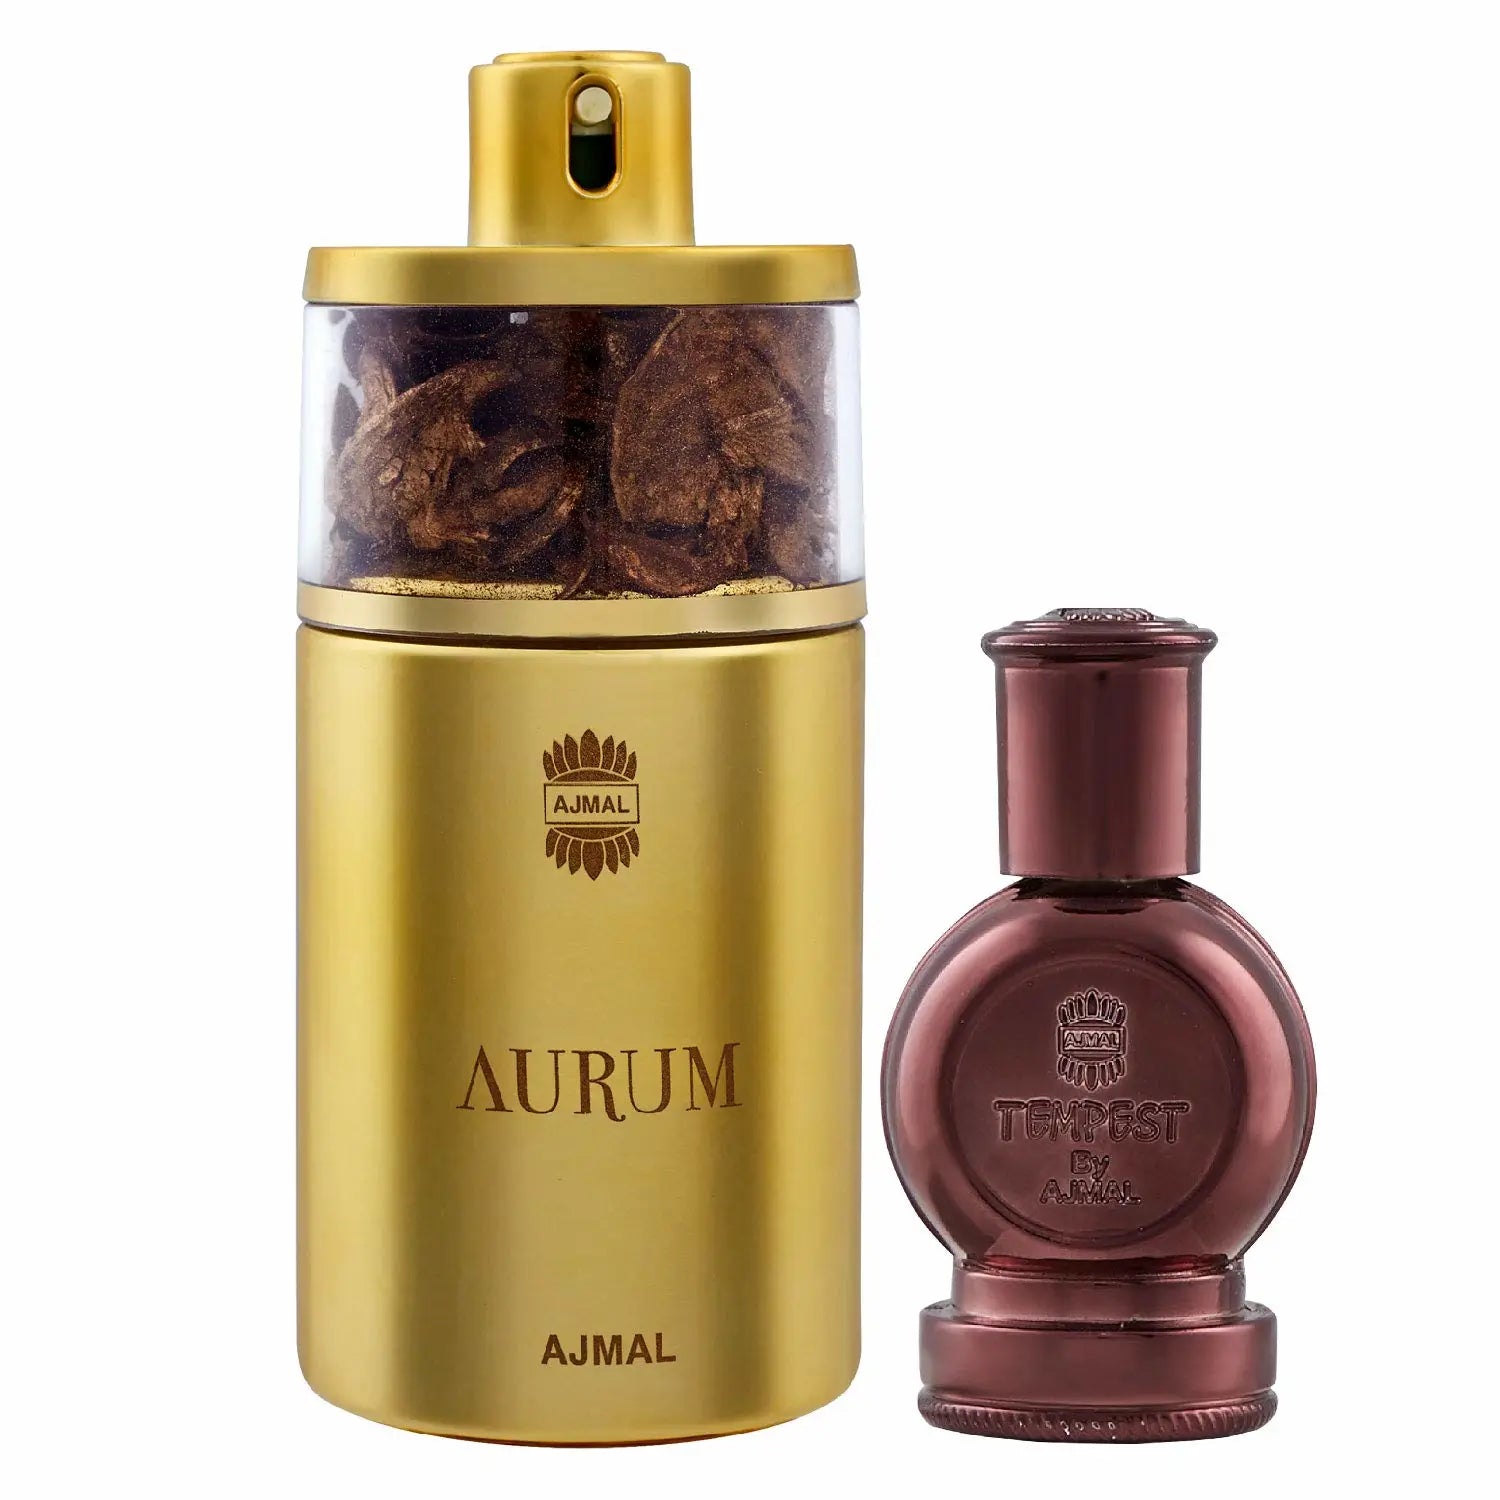 Ajmal Aurum EDP + Tempest Concentrated Perfume